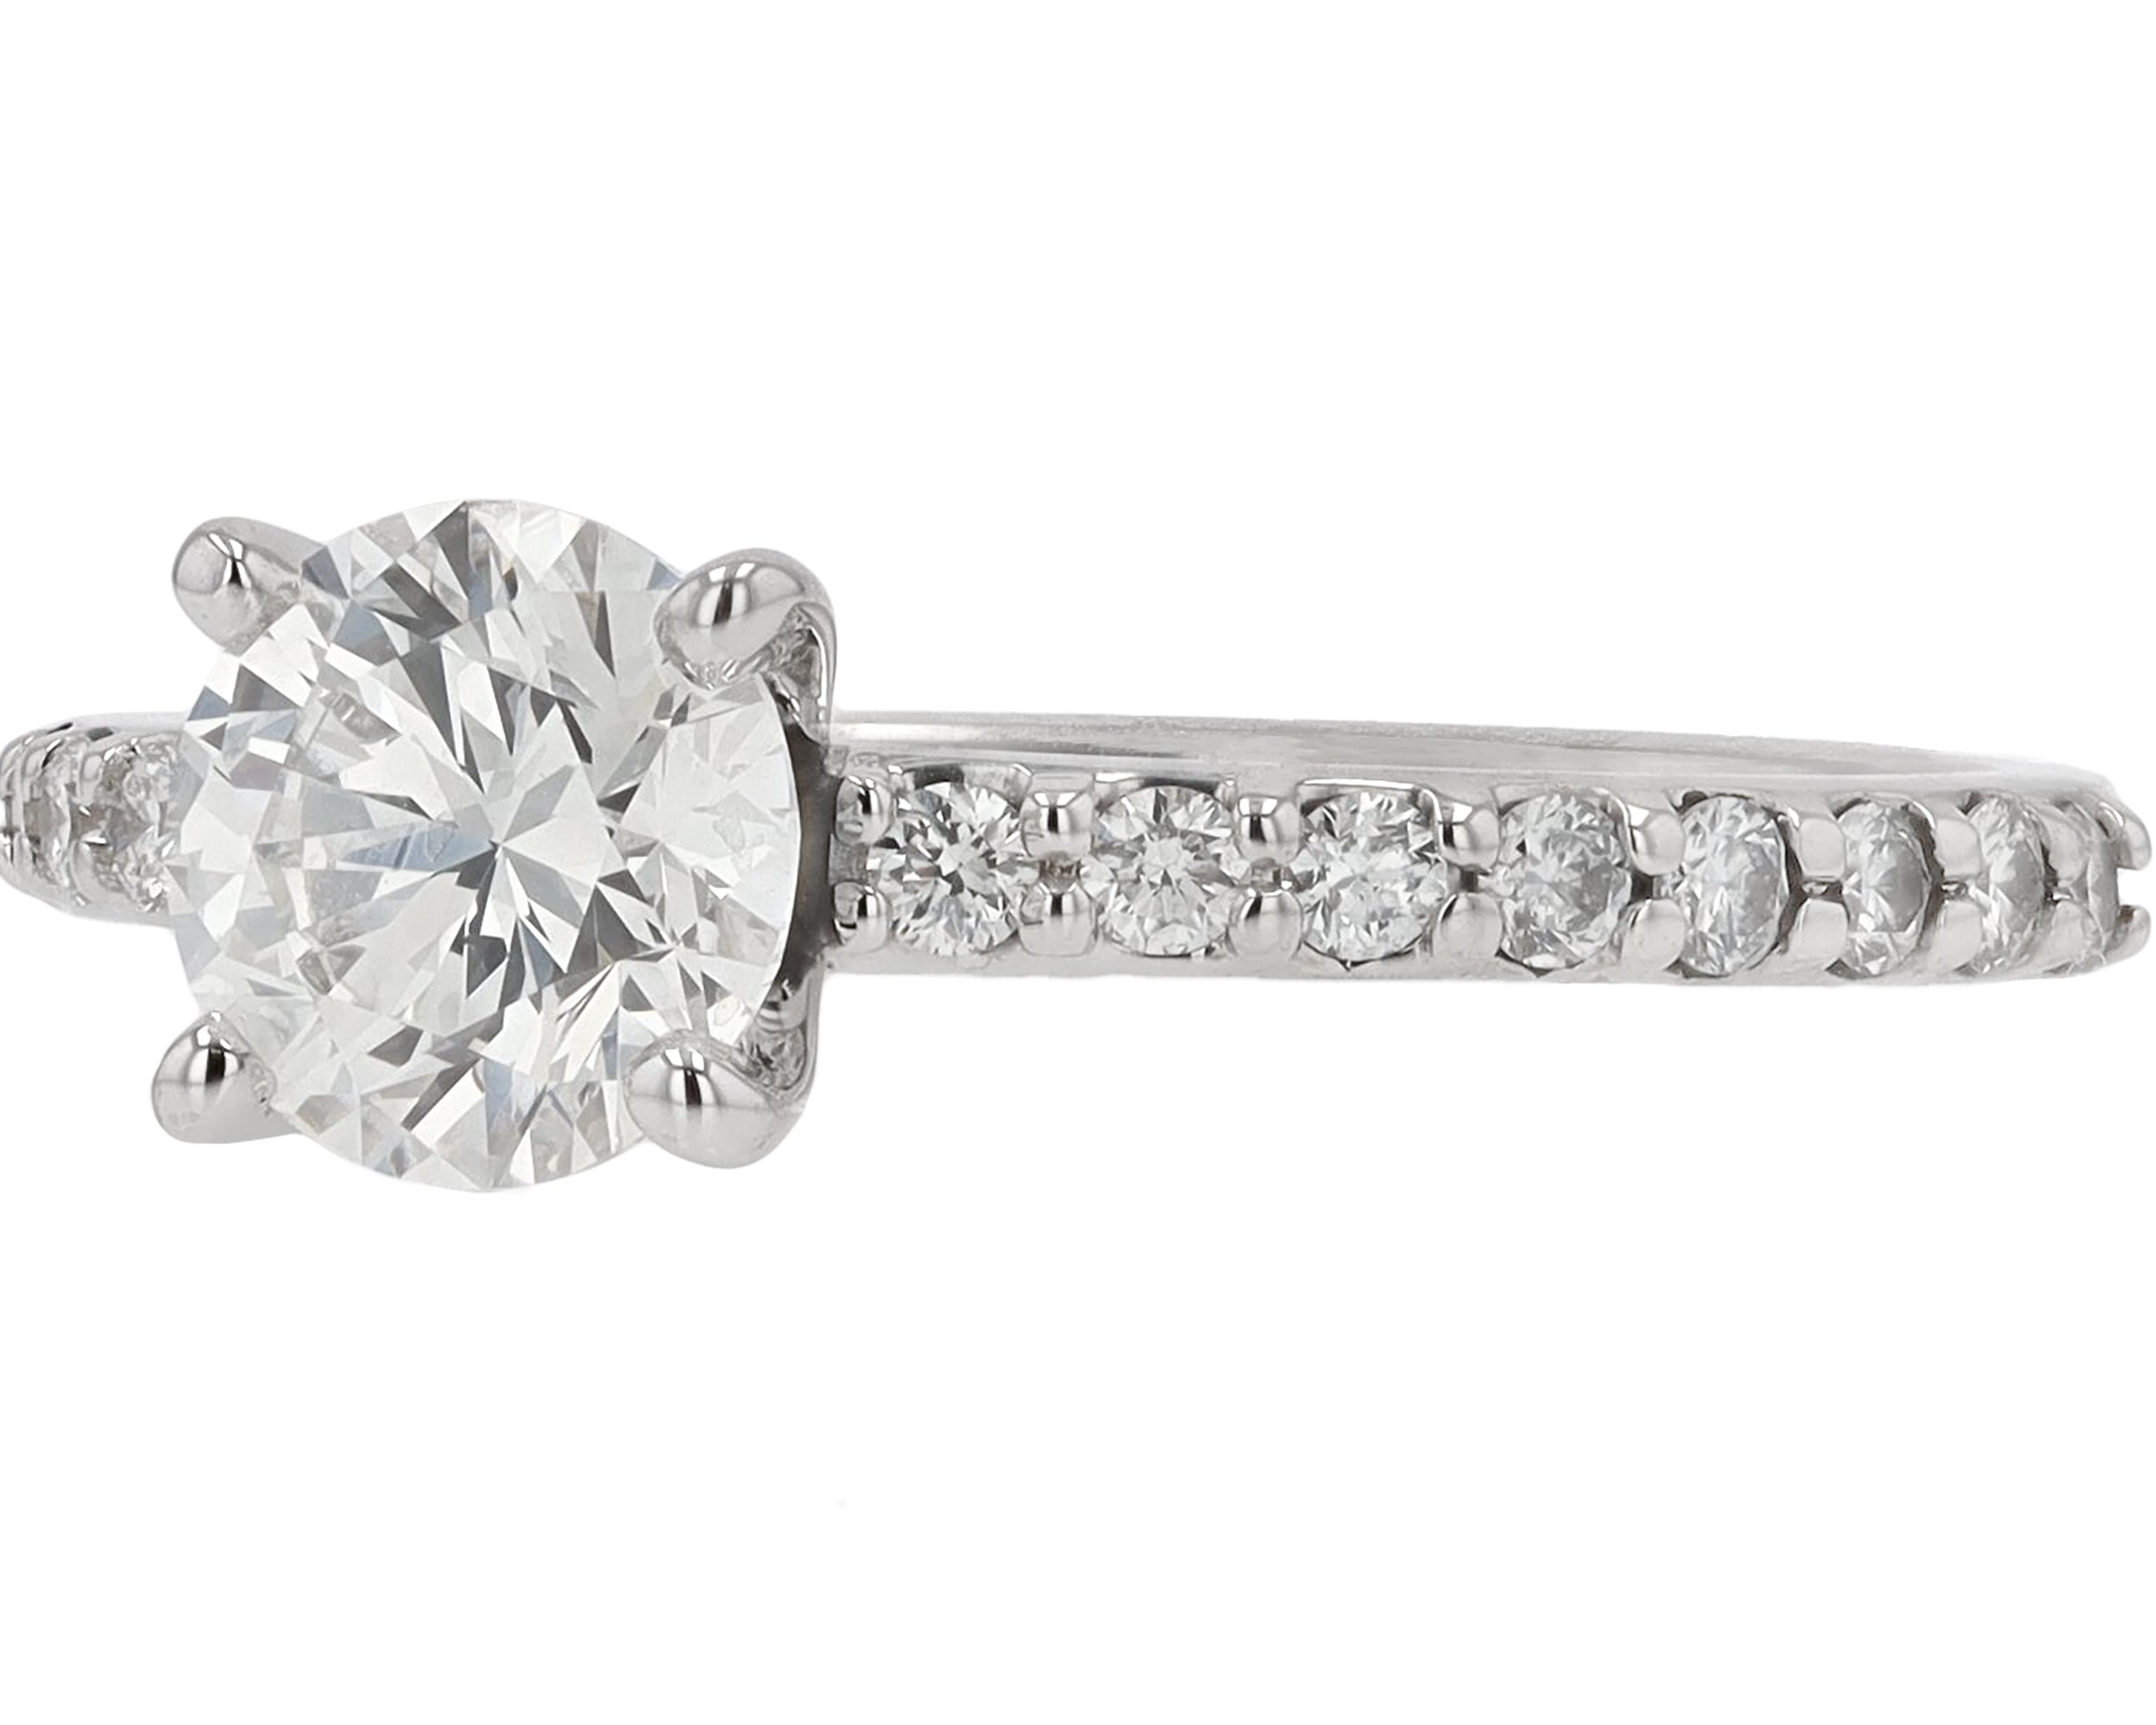 GIA Certified 0.80 carat Round Brilliant Cut Solitaire Diamond Ring